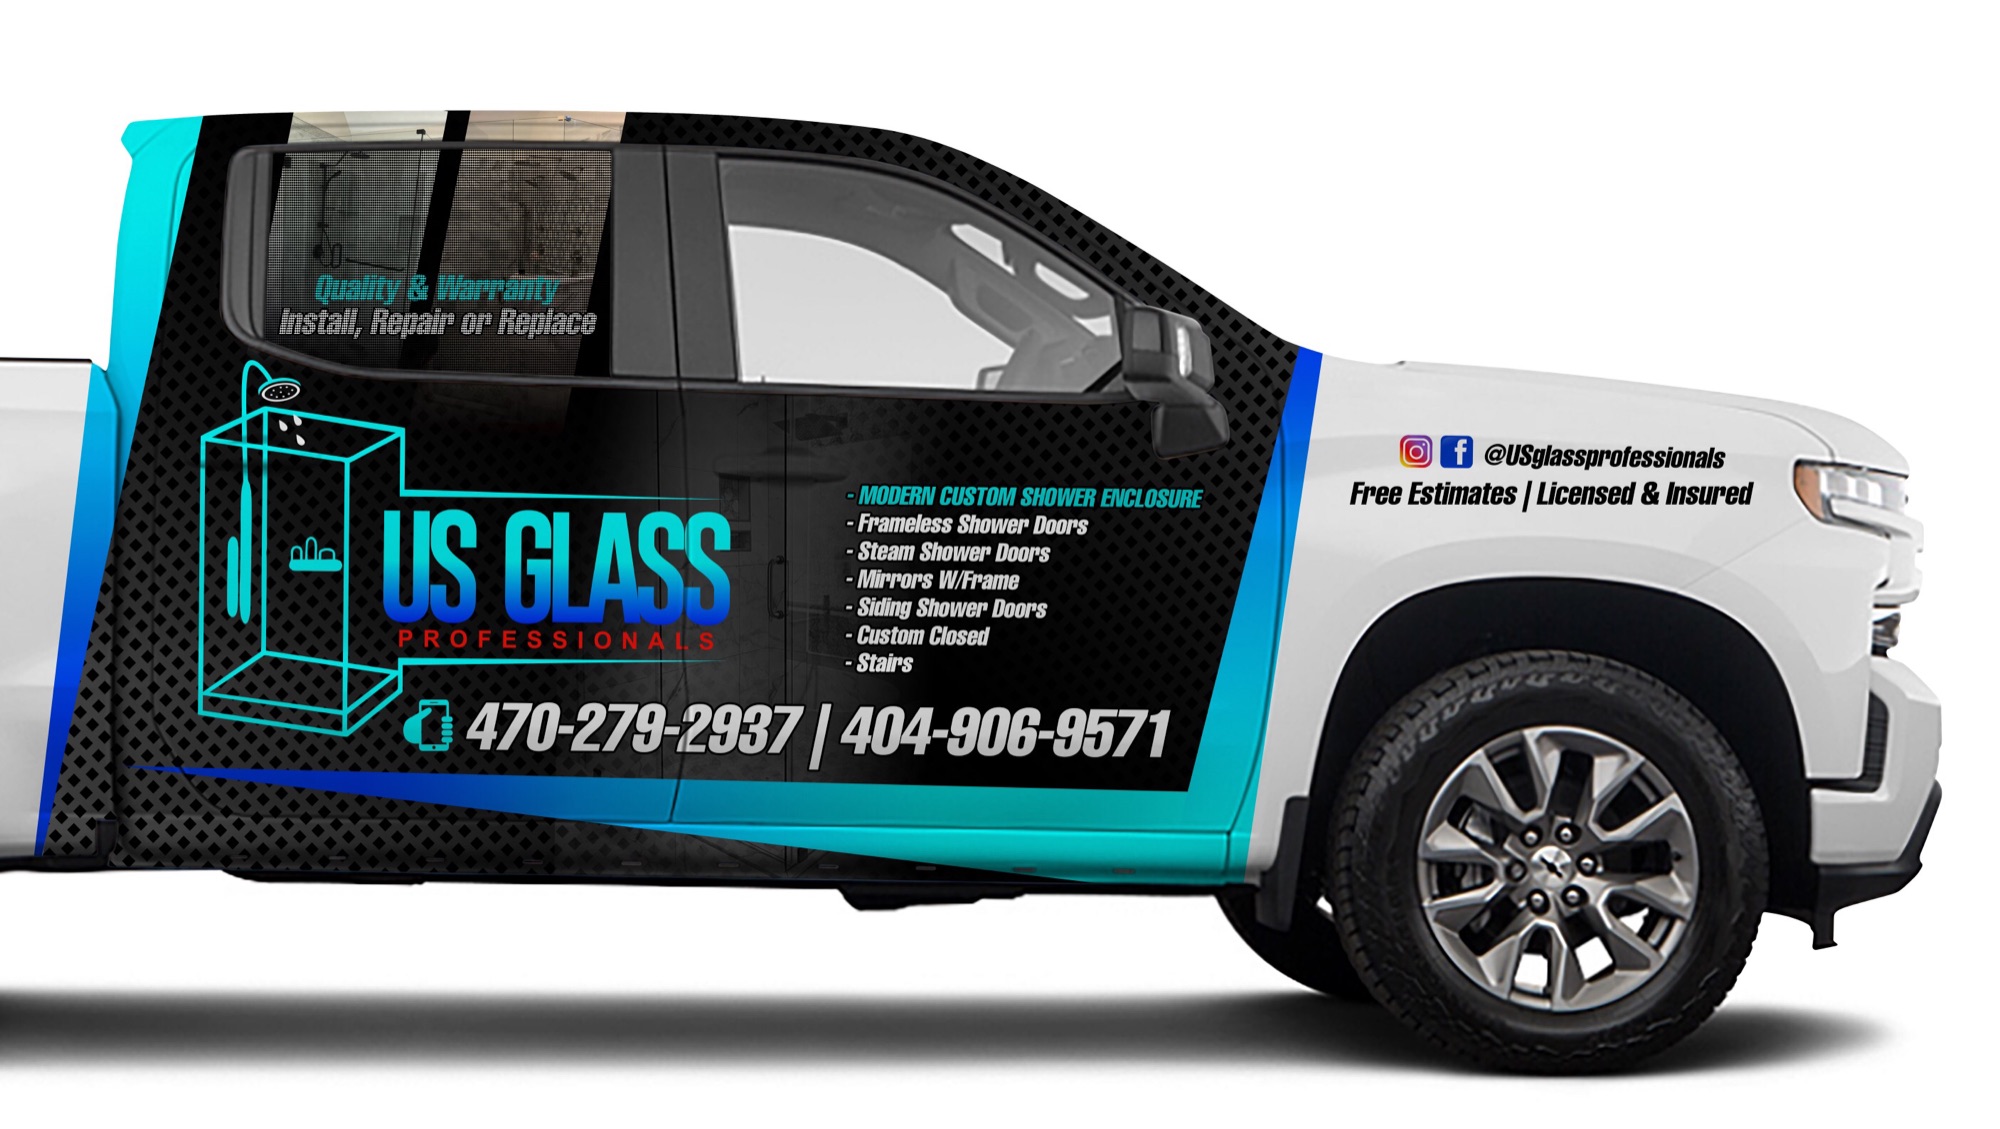 US Glass Professionals Logo